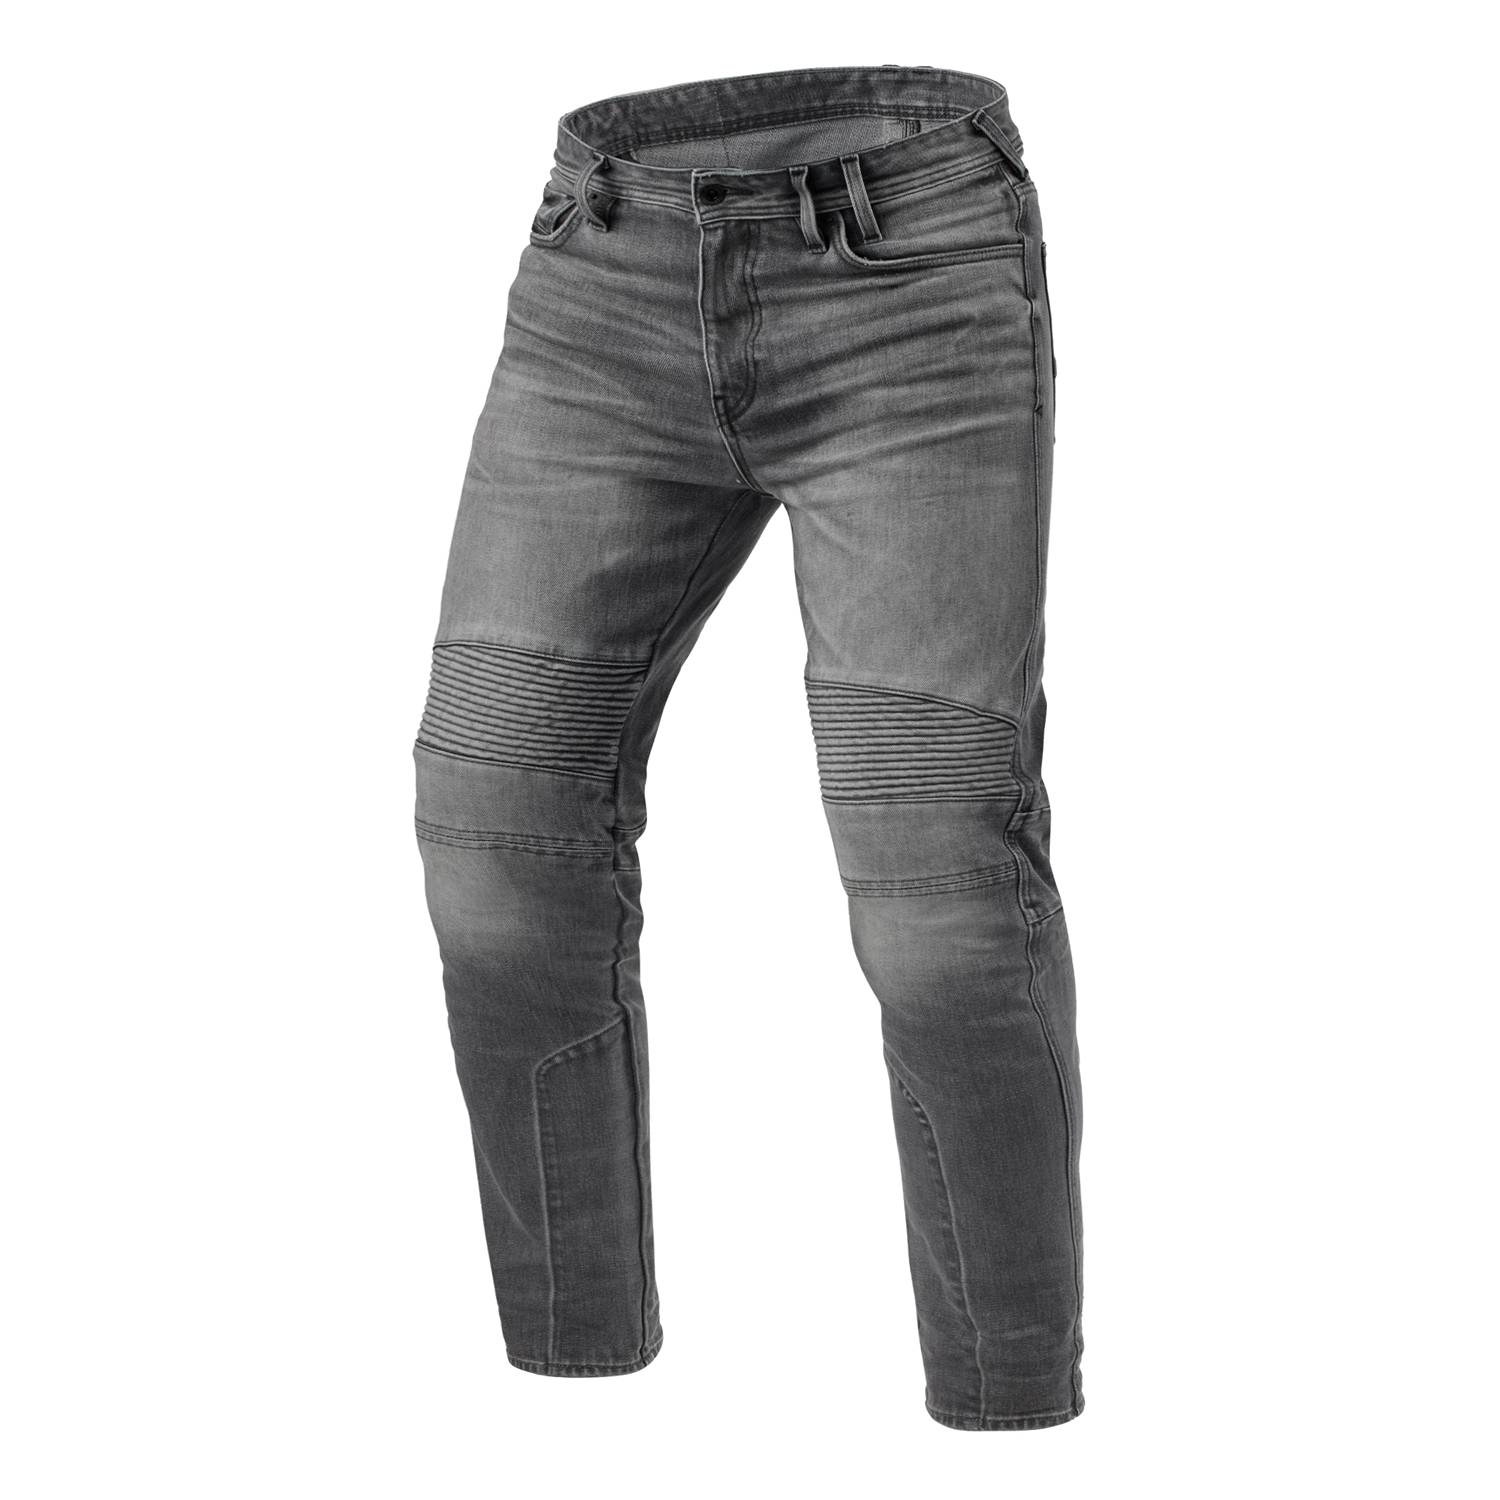 Image of REV'IT! Jeans Moto 2 TF Medium Grey Used L34 Motorcycle Jeans Size L34/W30 EN